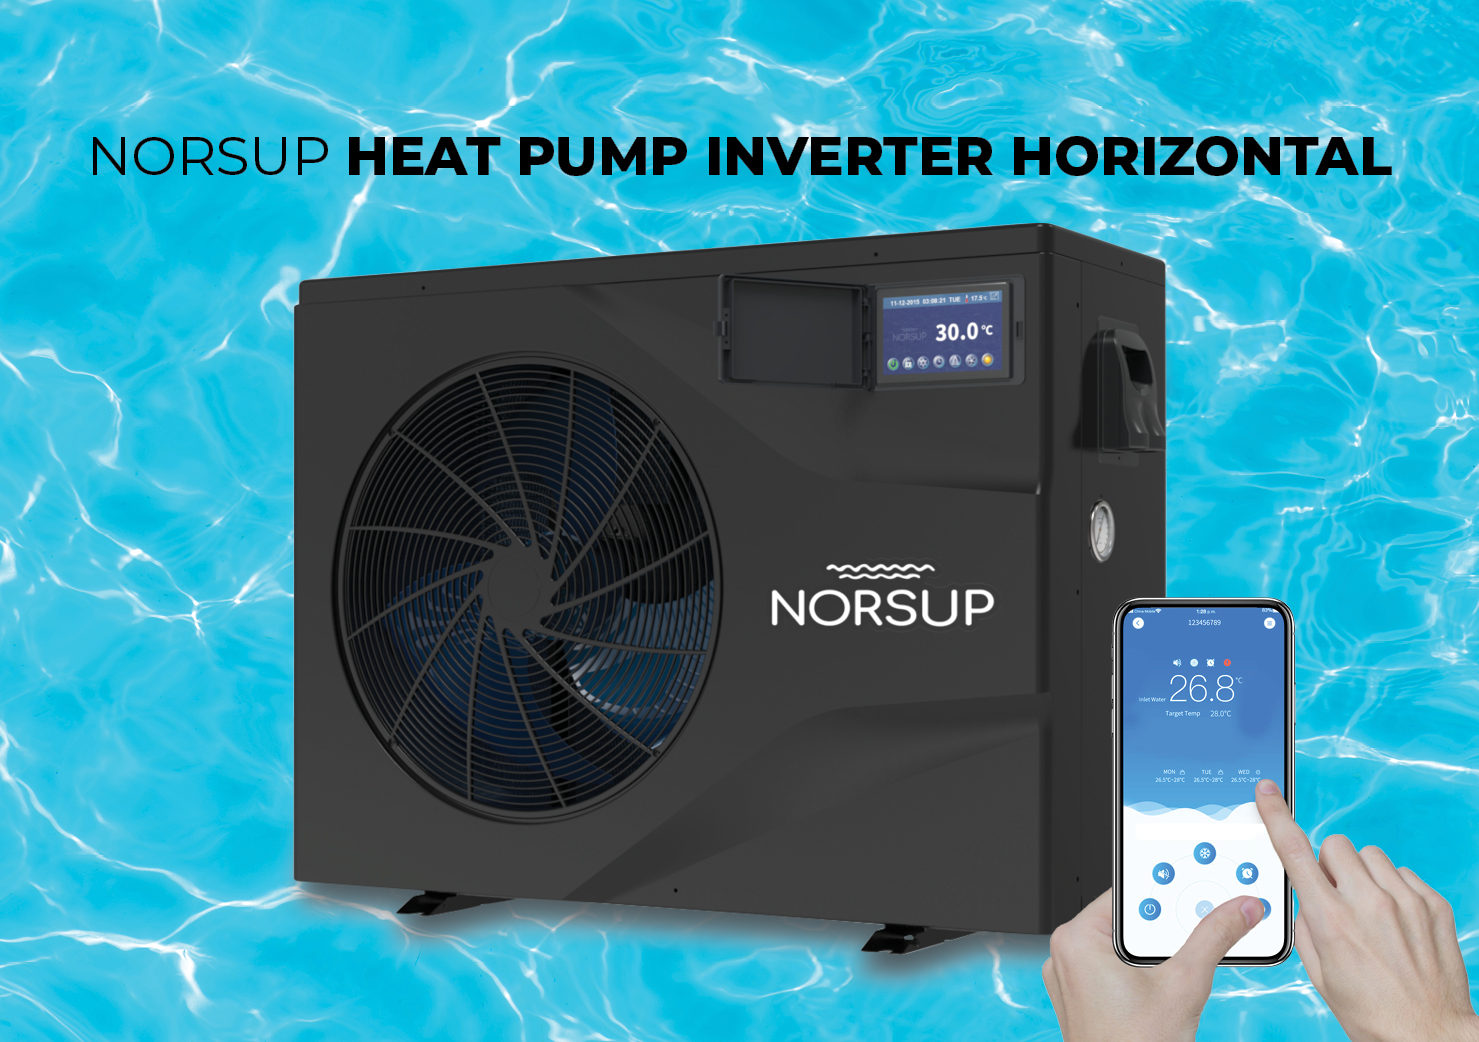 Norsup inverter heat pump horizontal